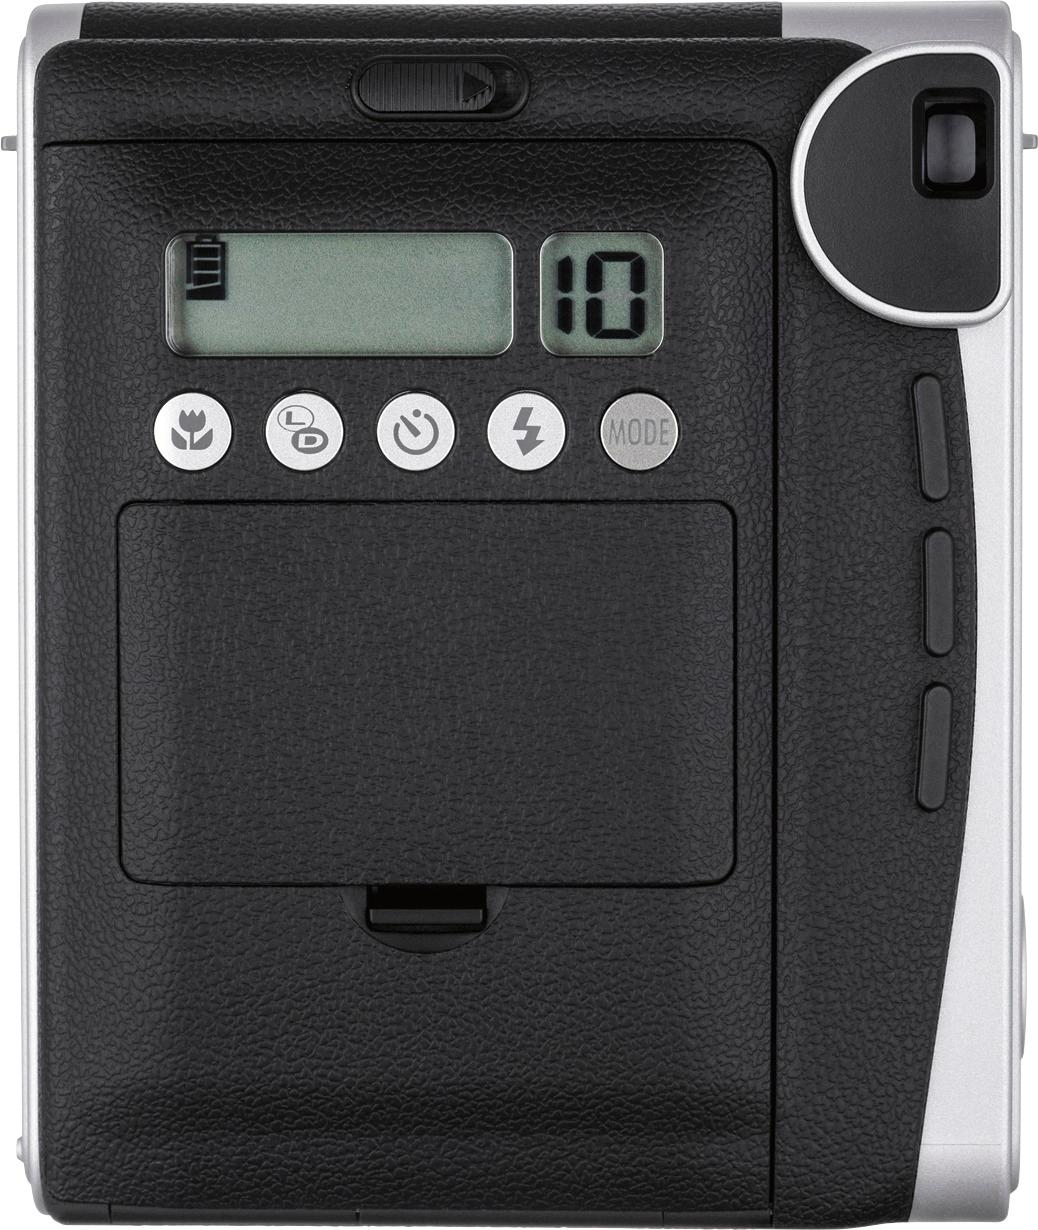 stapel thuis Zwembad Best Buy: Fujifilm instax mini 90 NEO CLASSIC Instant Film Camera Black  16404571